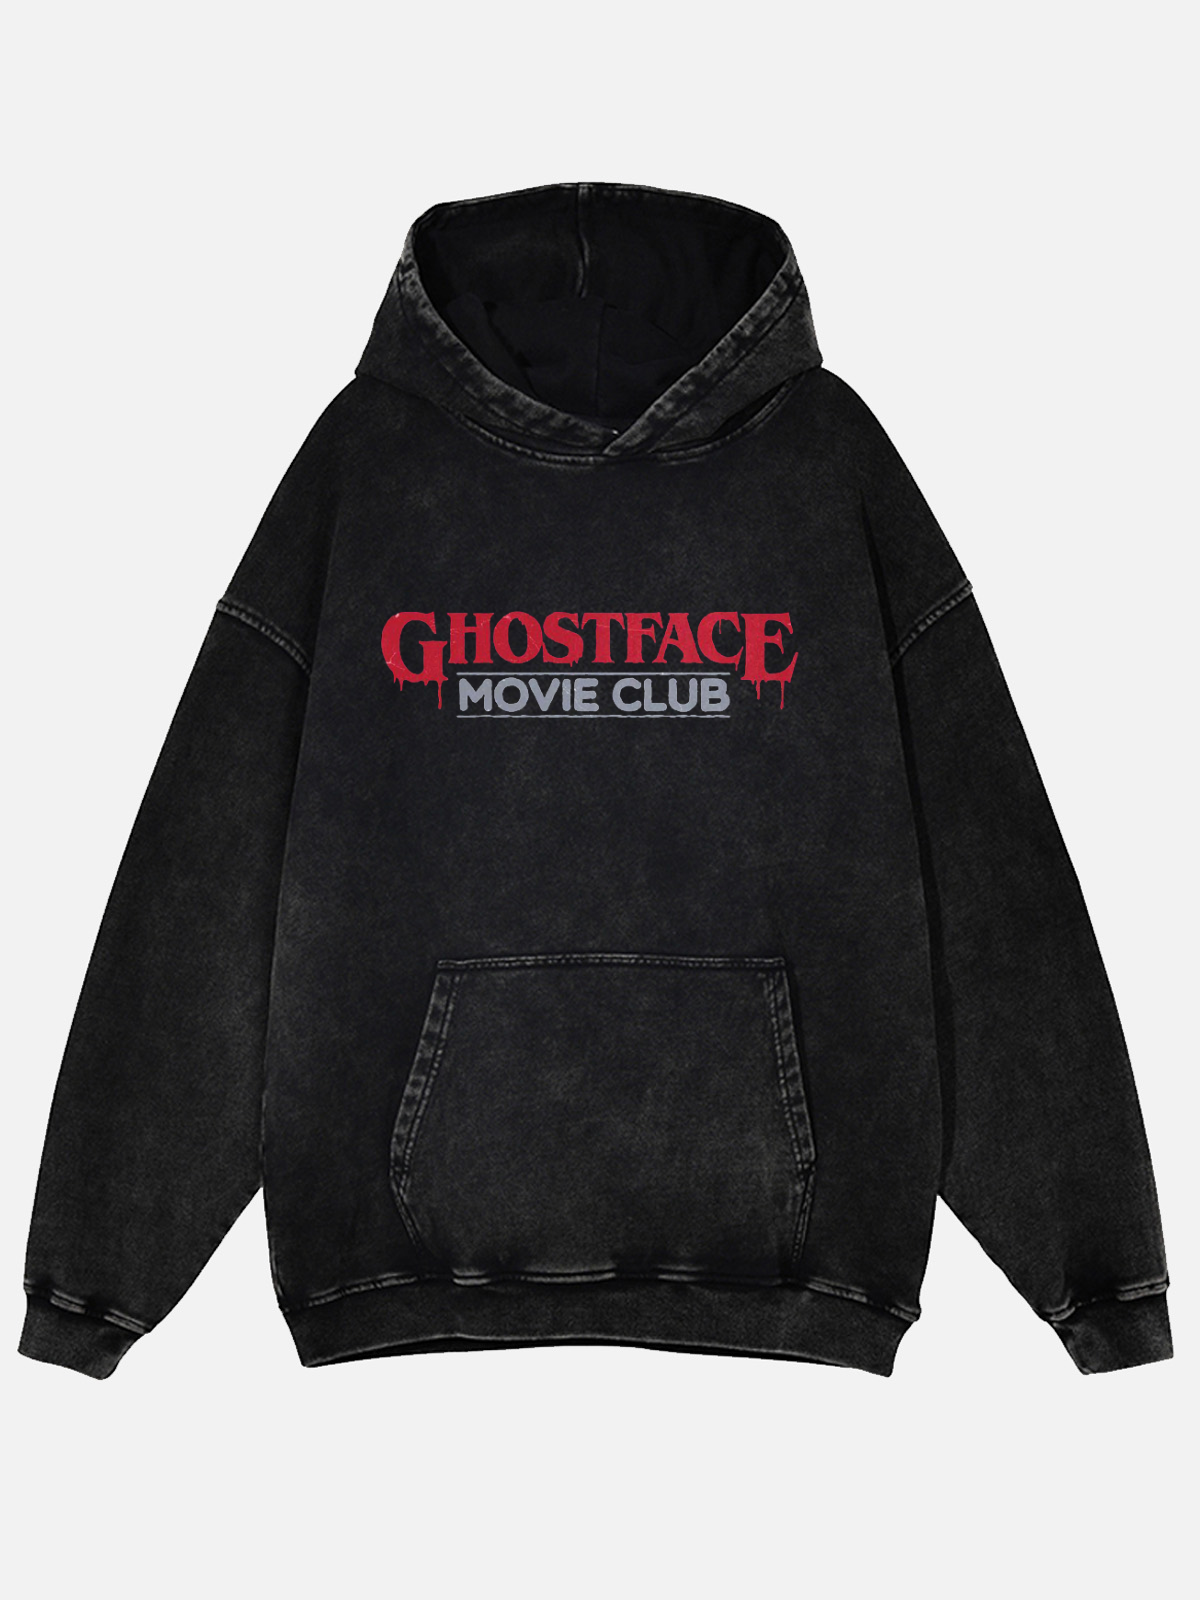 Ghostface Movie Club Unisex Wash Hooded Sweatshirt